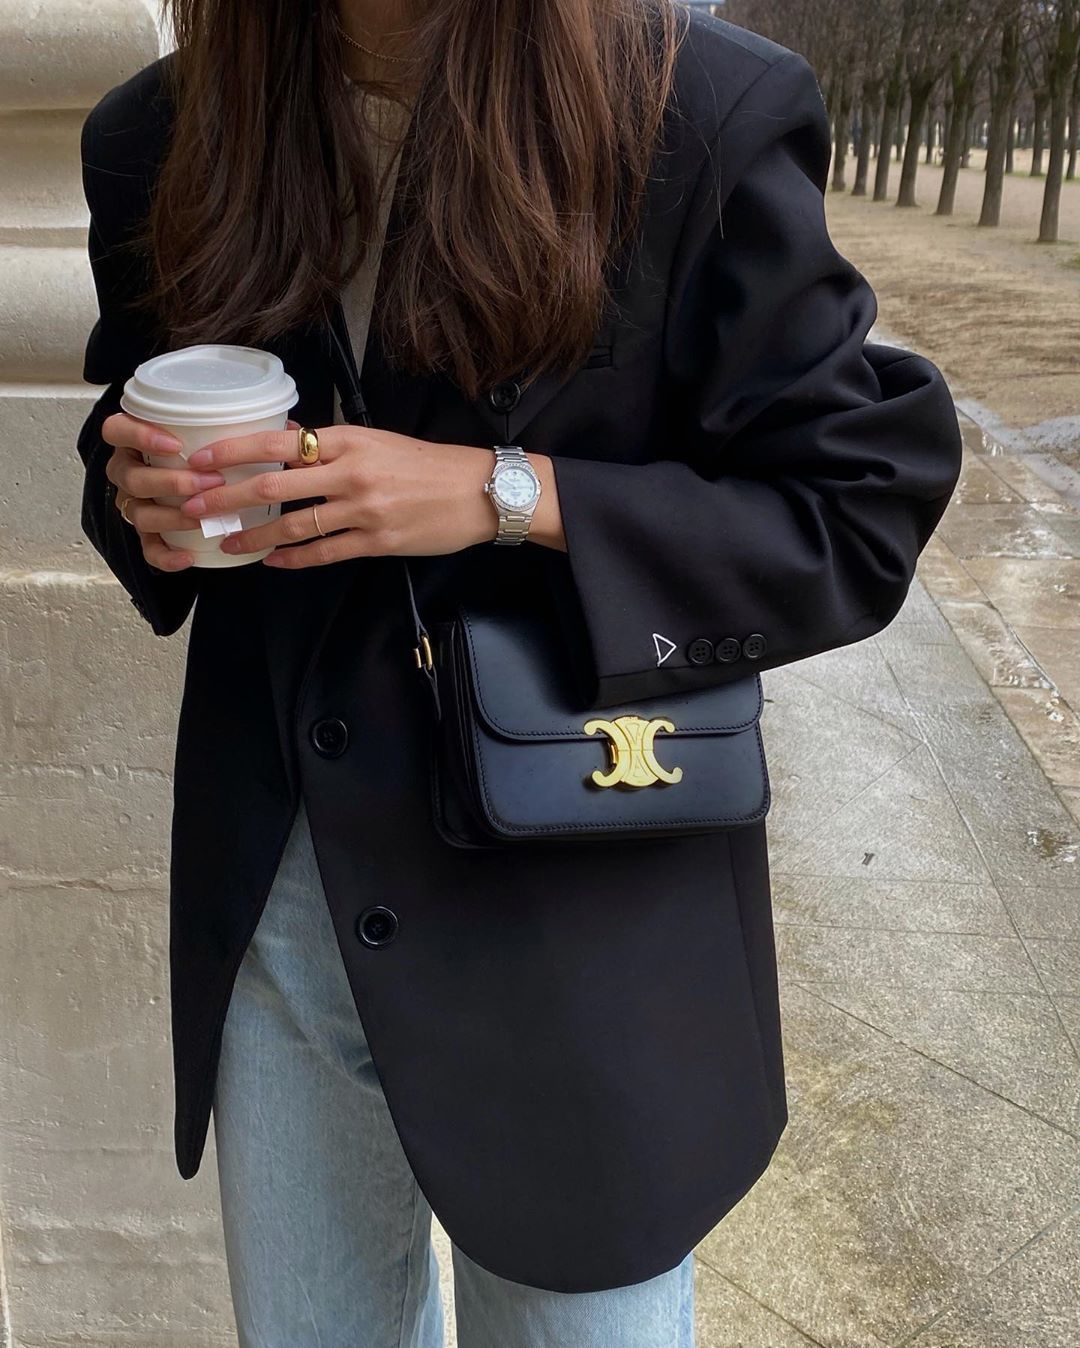 Celine Bags: Luxury Handbags for the Fashion-forward